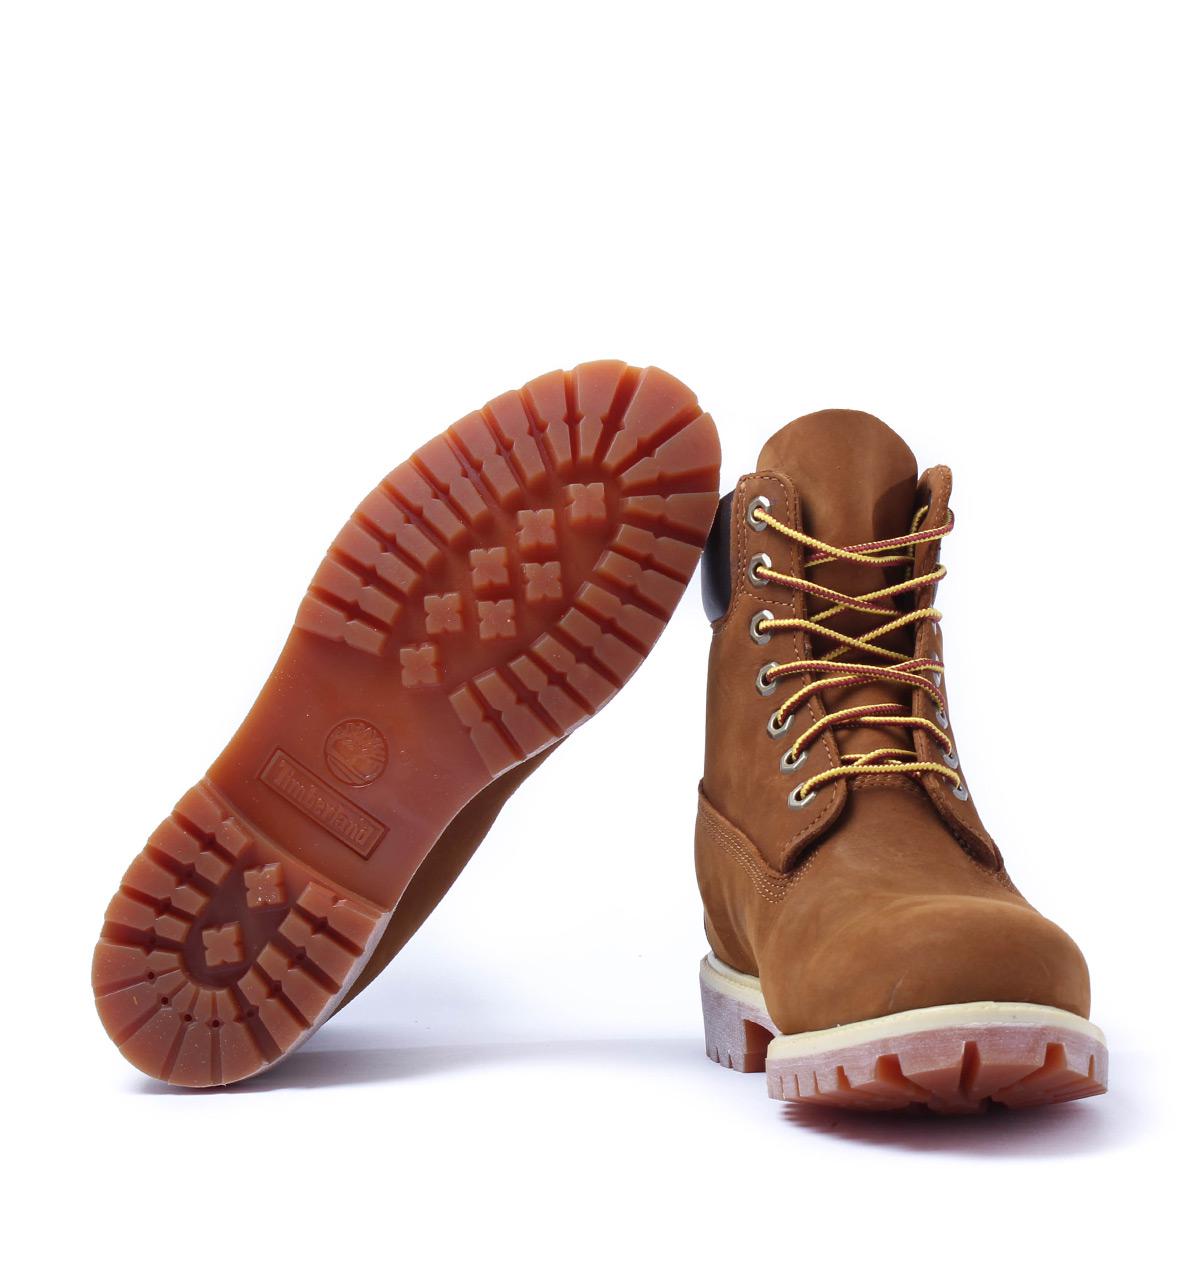 Timberland Leather Rust Nubuck 6-inch Premium Waterproof Boots in Brown ...